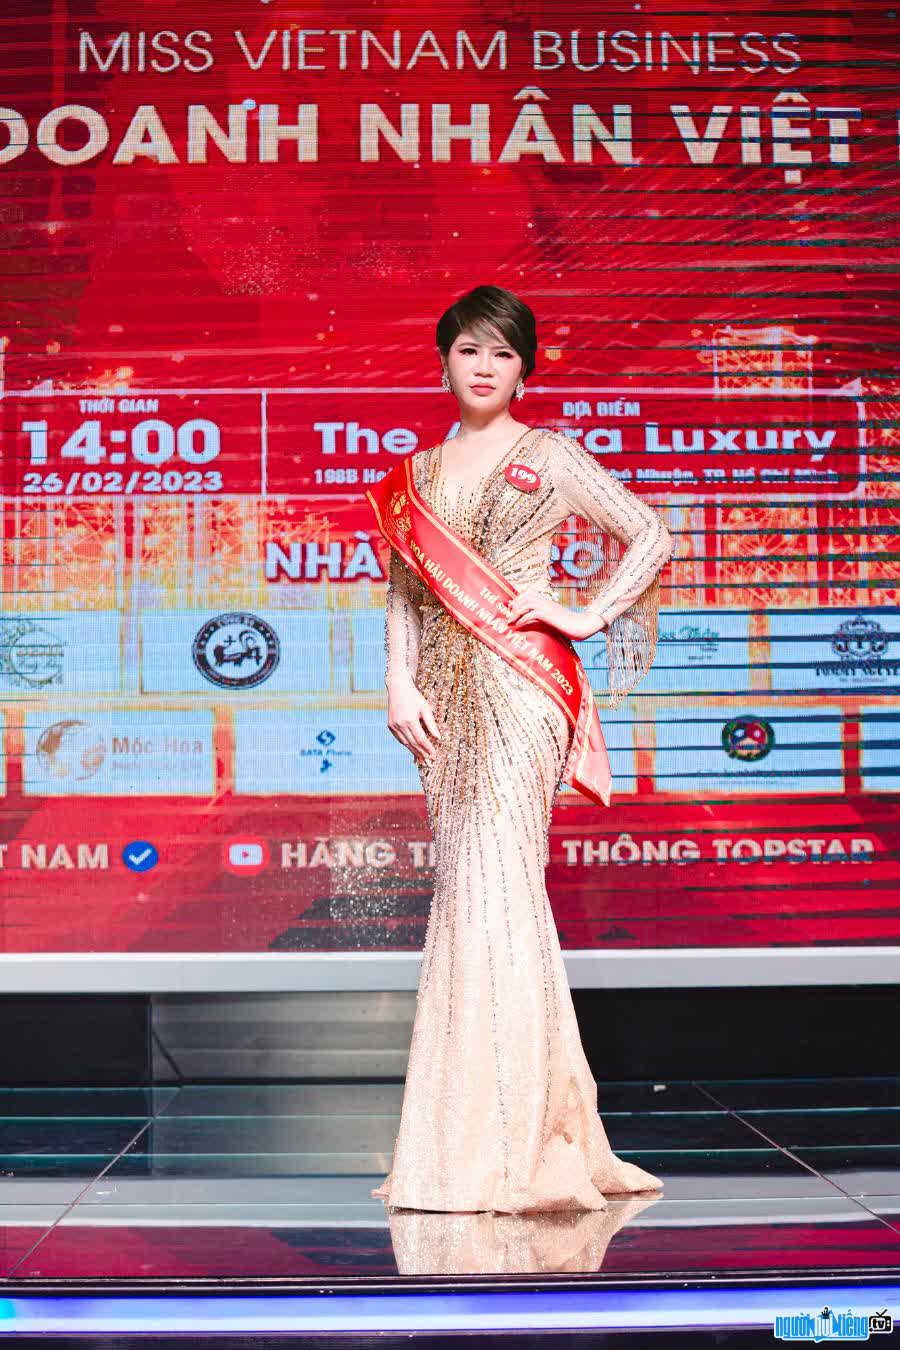 Entrepreneur Le Thi Lan was crowned Miss Vietnam Entrepreneur 2023